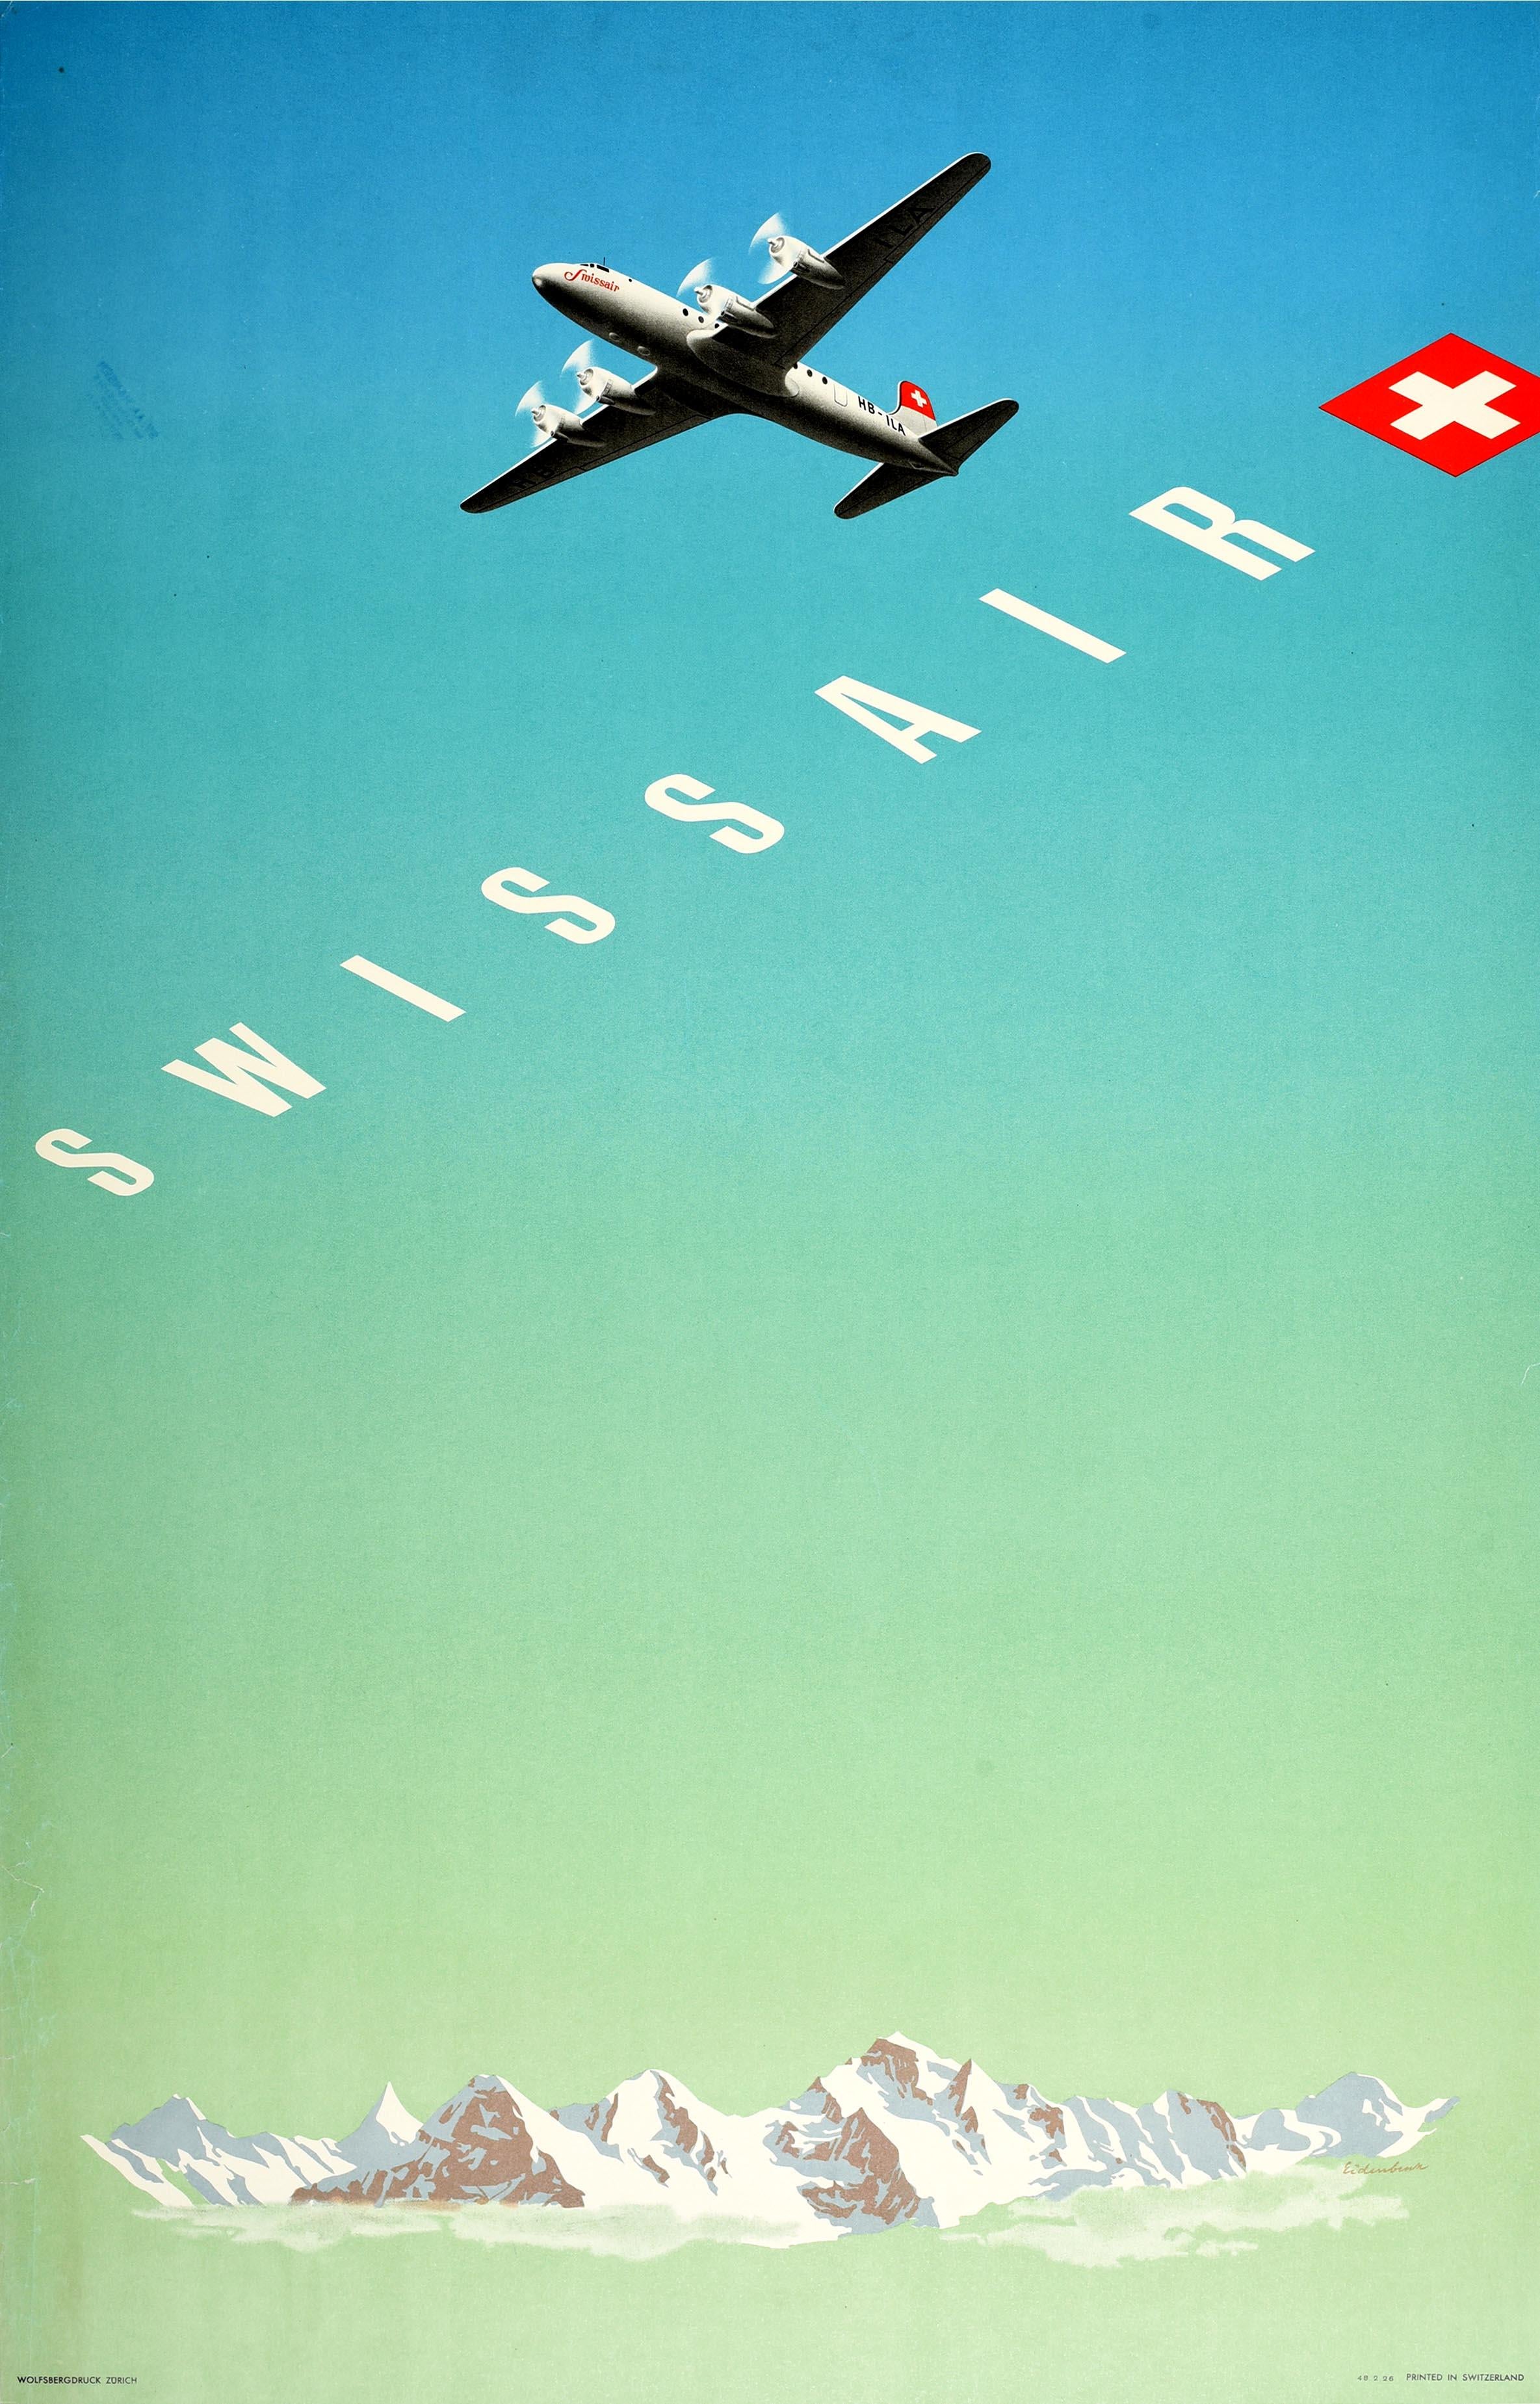 Swissair Switzerland Vintage Airline Airlines Travel Advertisement Poster Print 